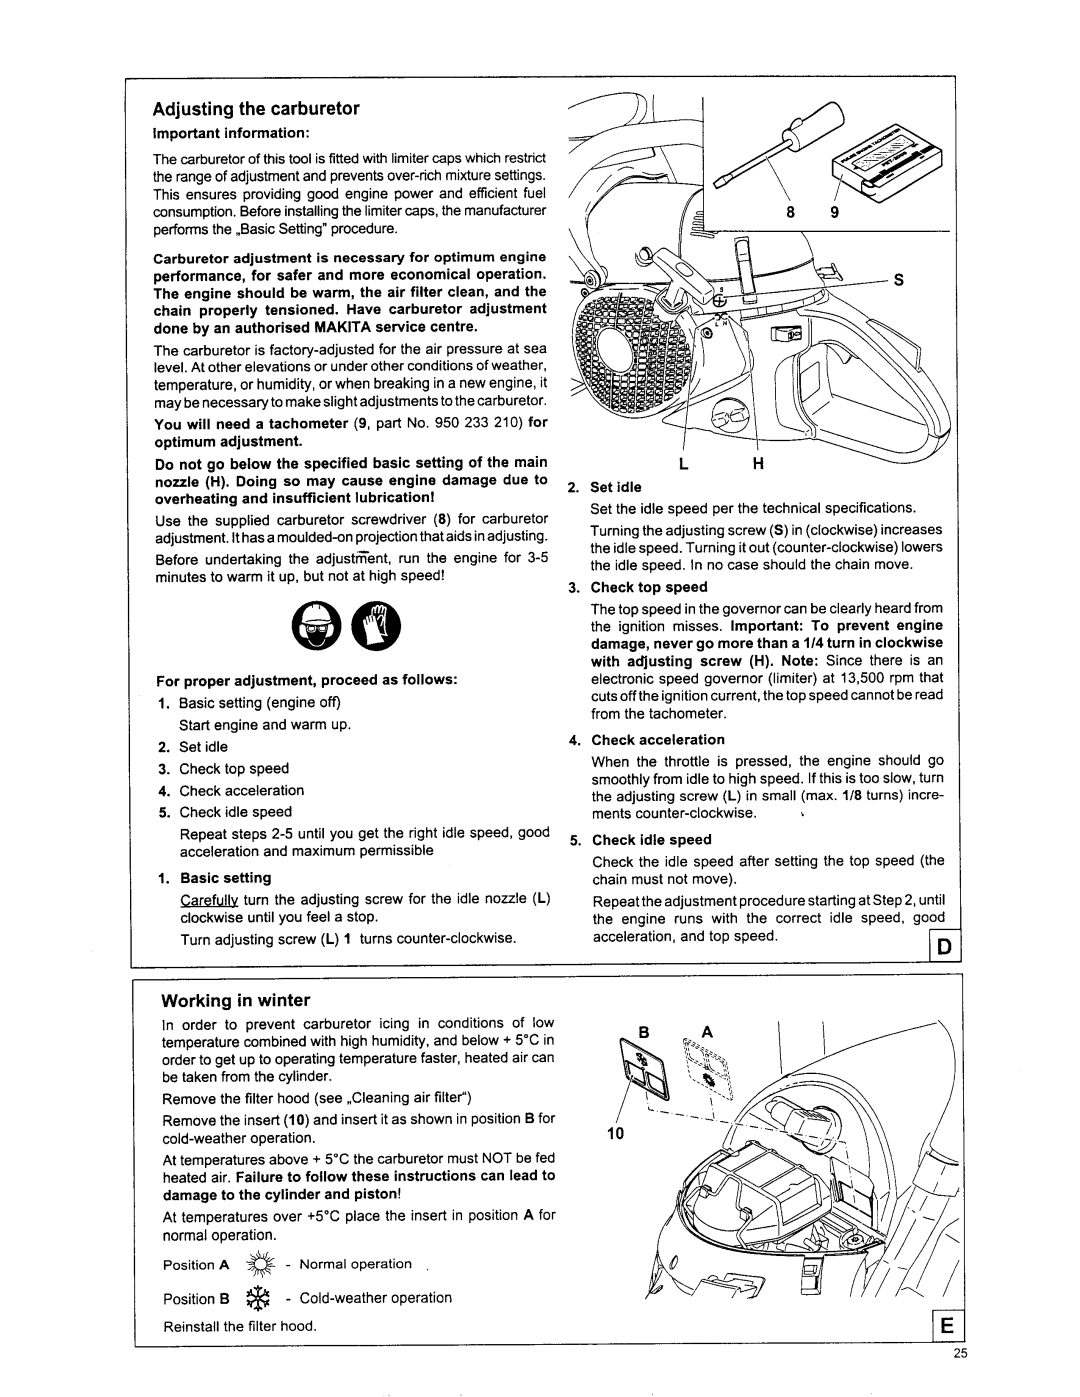 Makita DCS 7901, DCS6401 manual Adjusting the carburetor, Working in winter, Important information, Basic setting, Set idle 